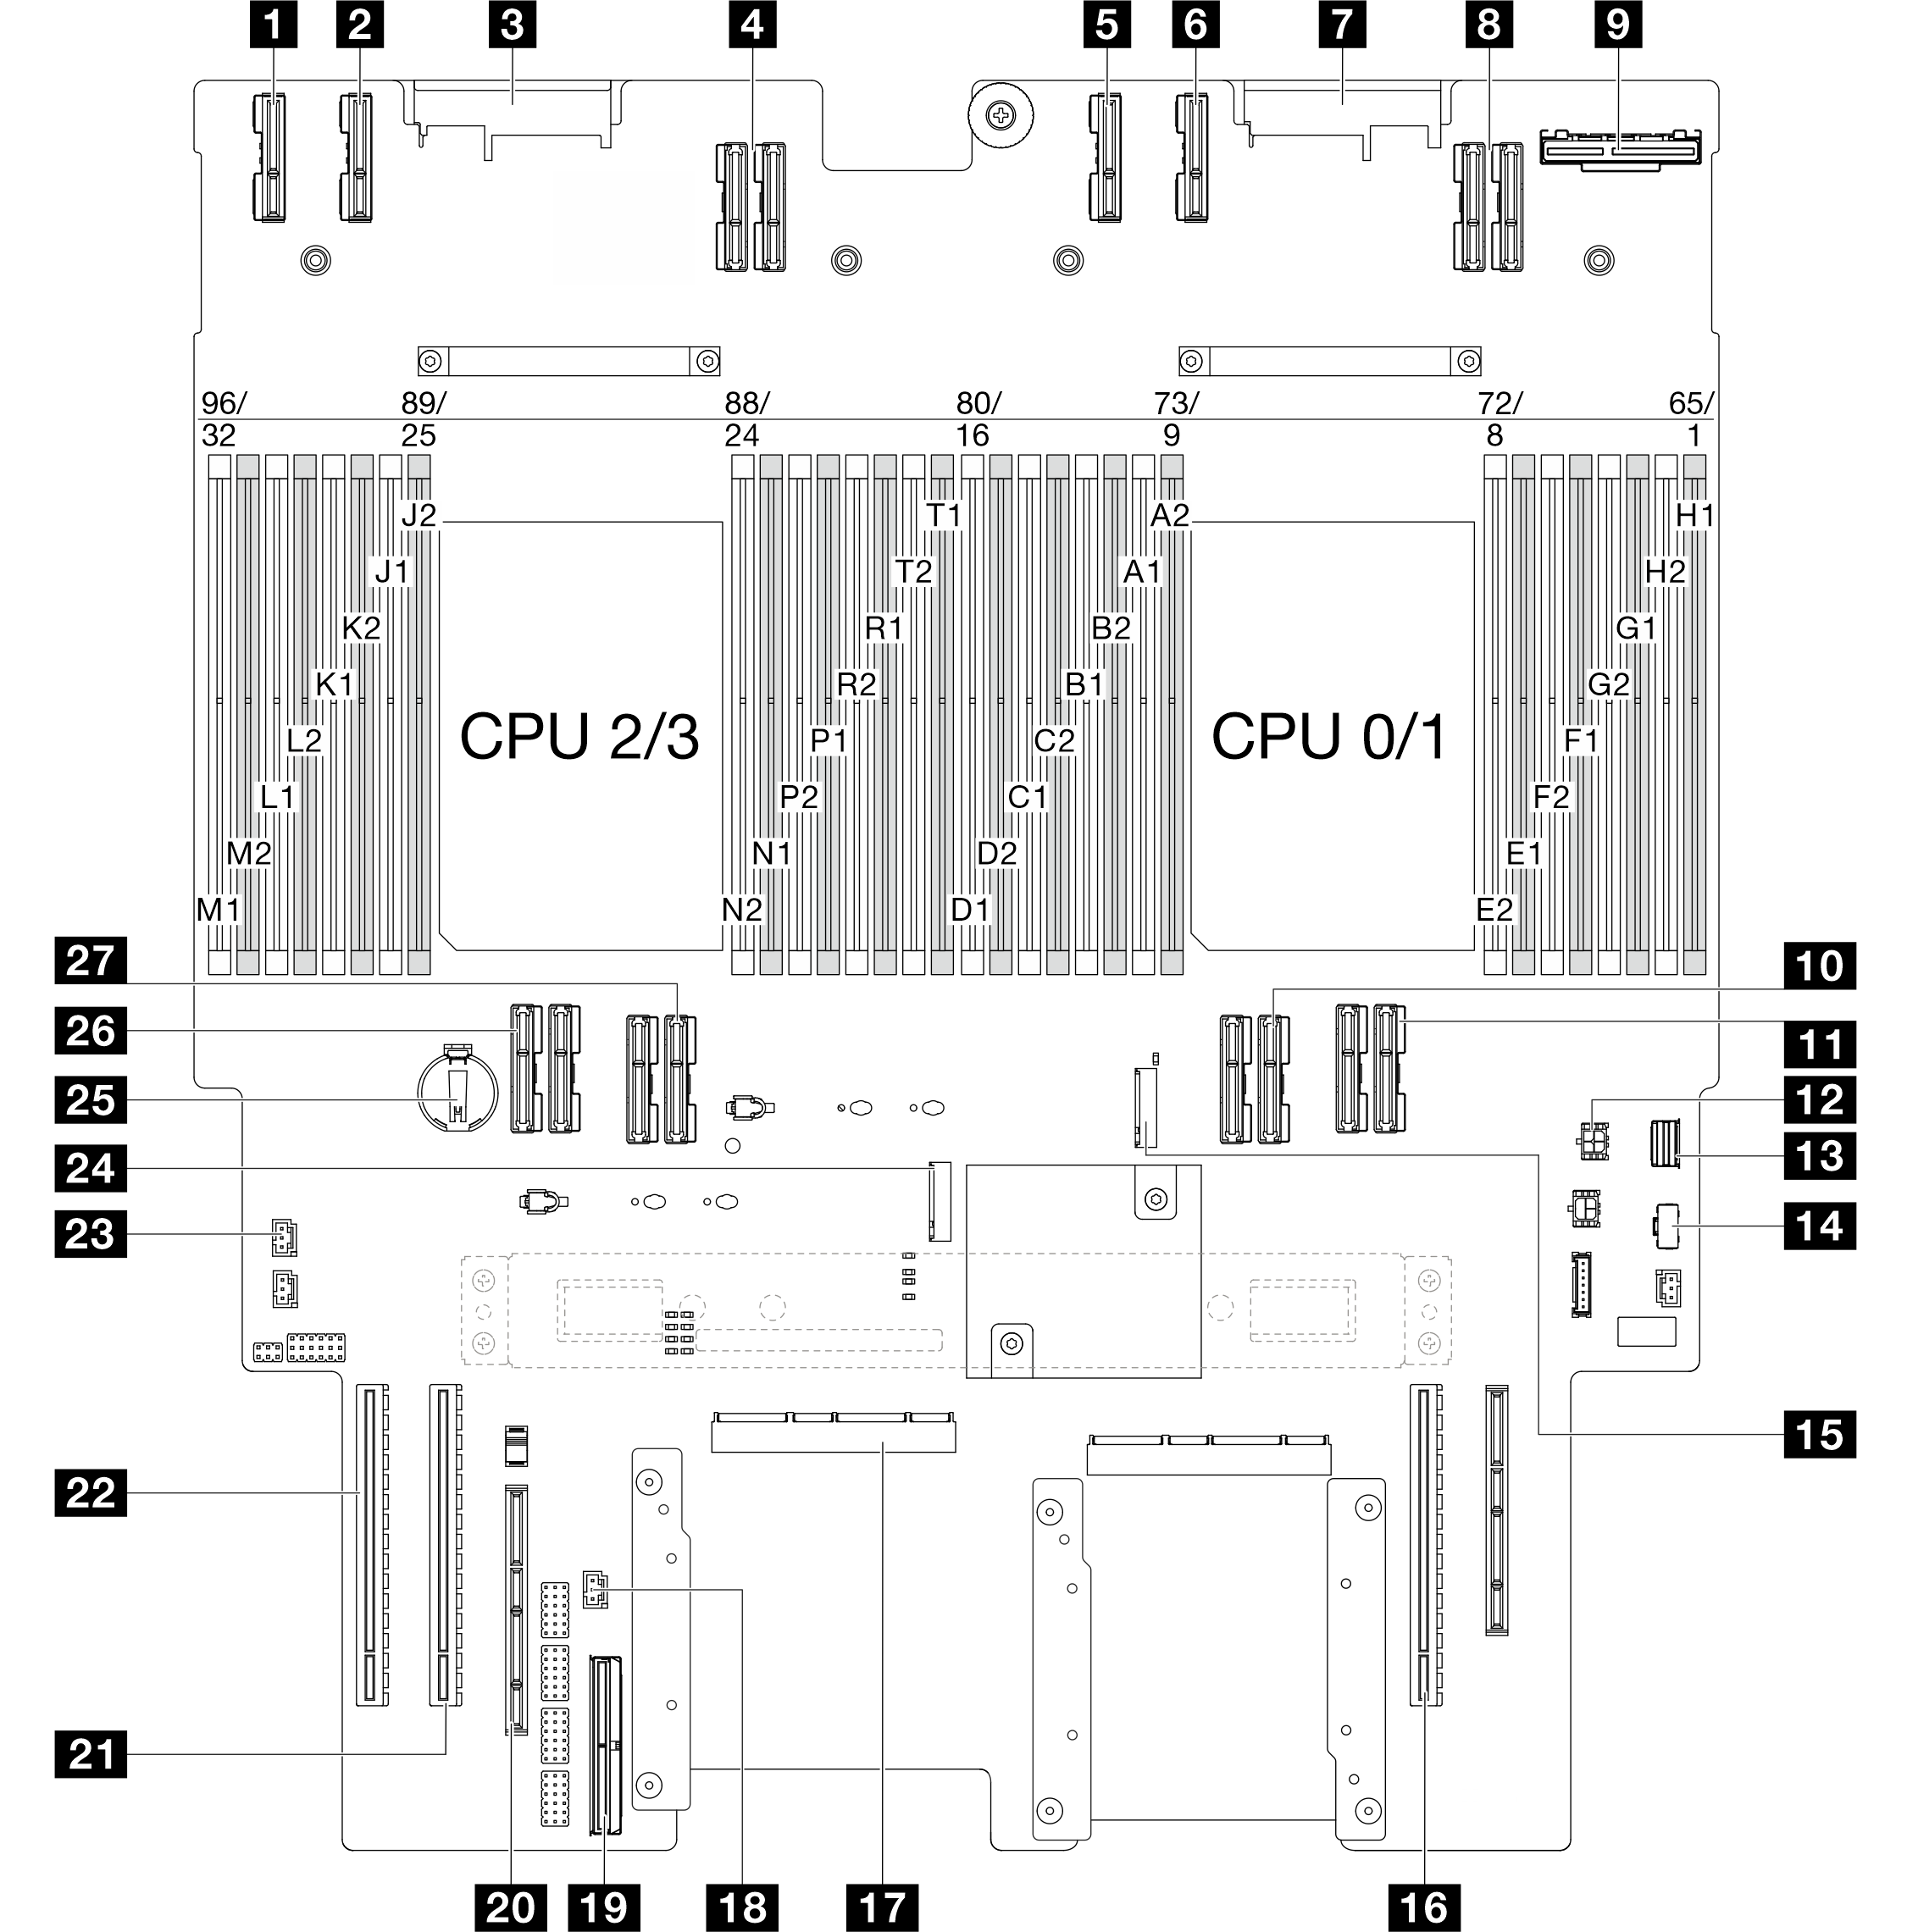 Lower processor board (MB) connectors